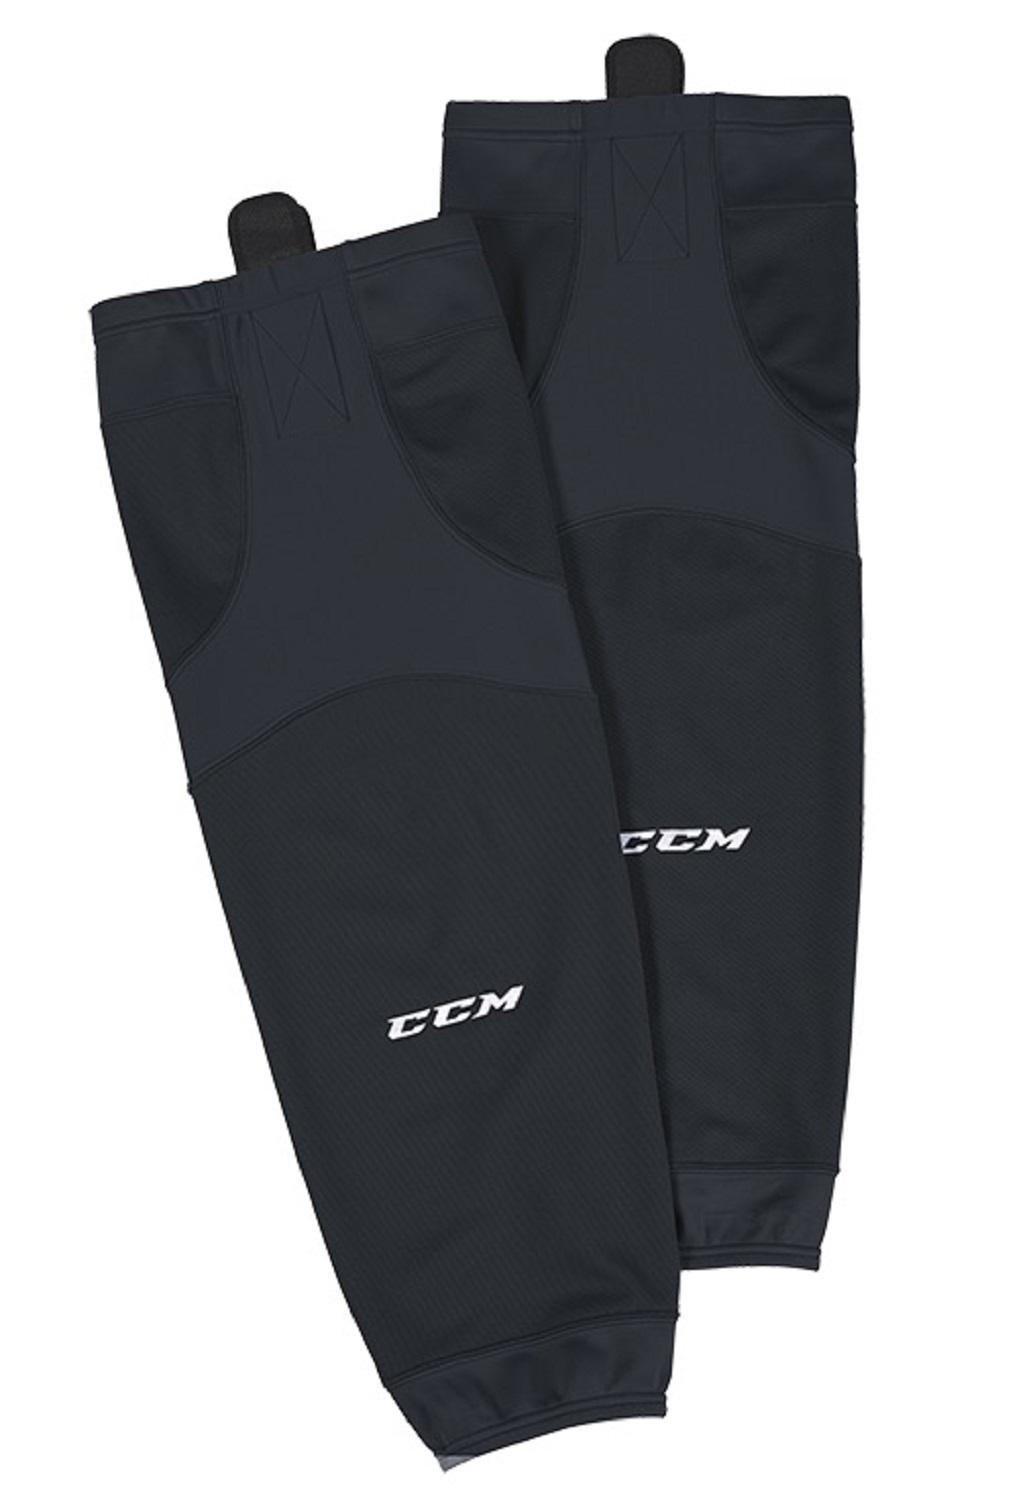 CCM Hockey Socks